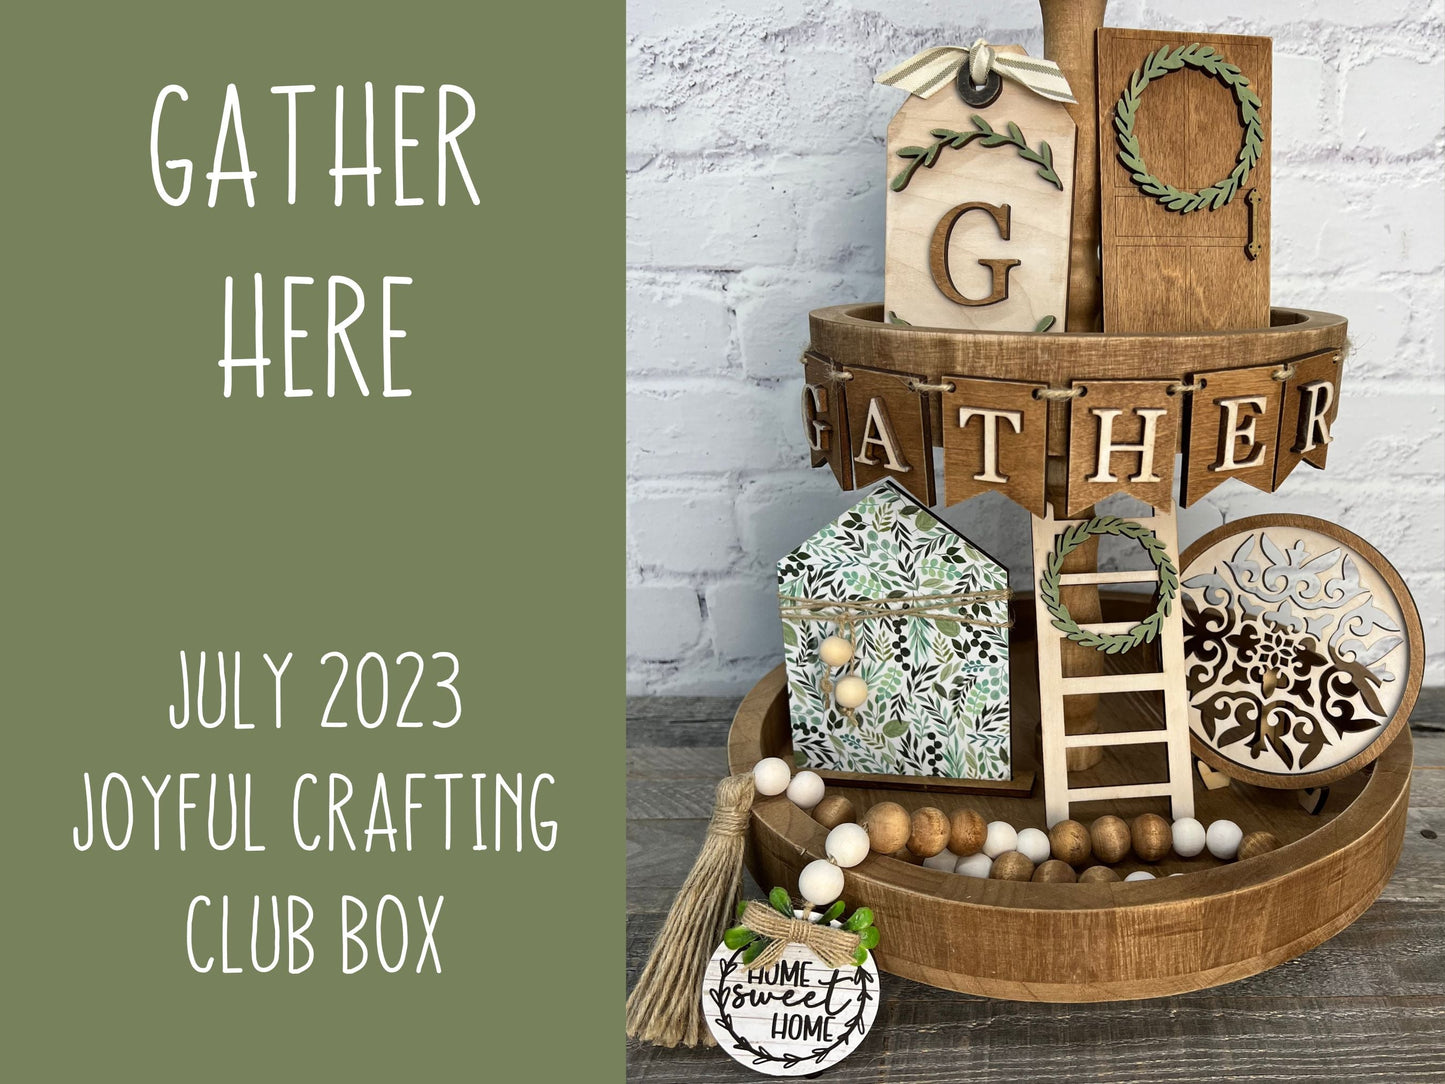 Joyful Crafting Club - Deluxe Plus Box